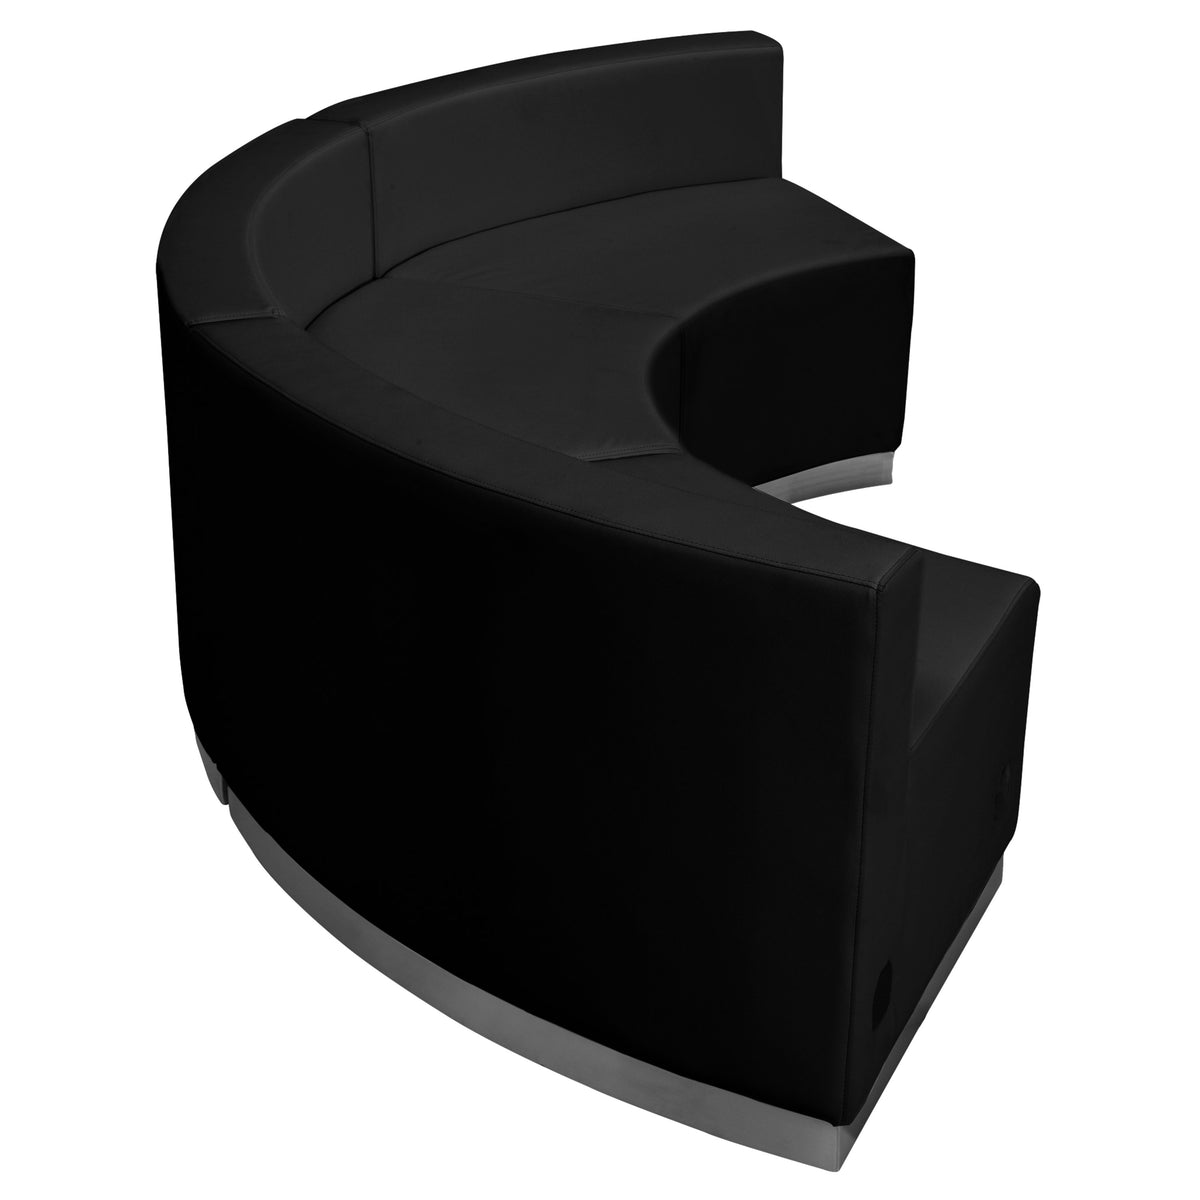 Black |#| 3 PC Black LeatherSoft Modular Reception Configuration w/Taut Back &Seat